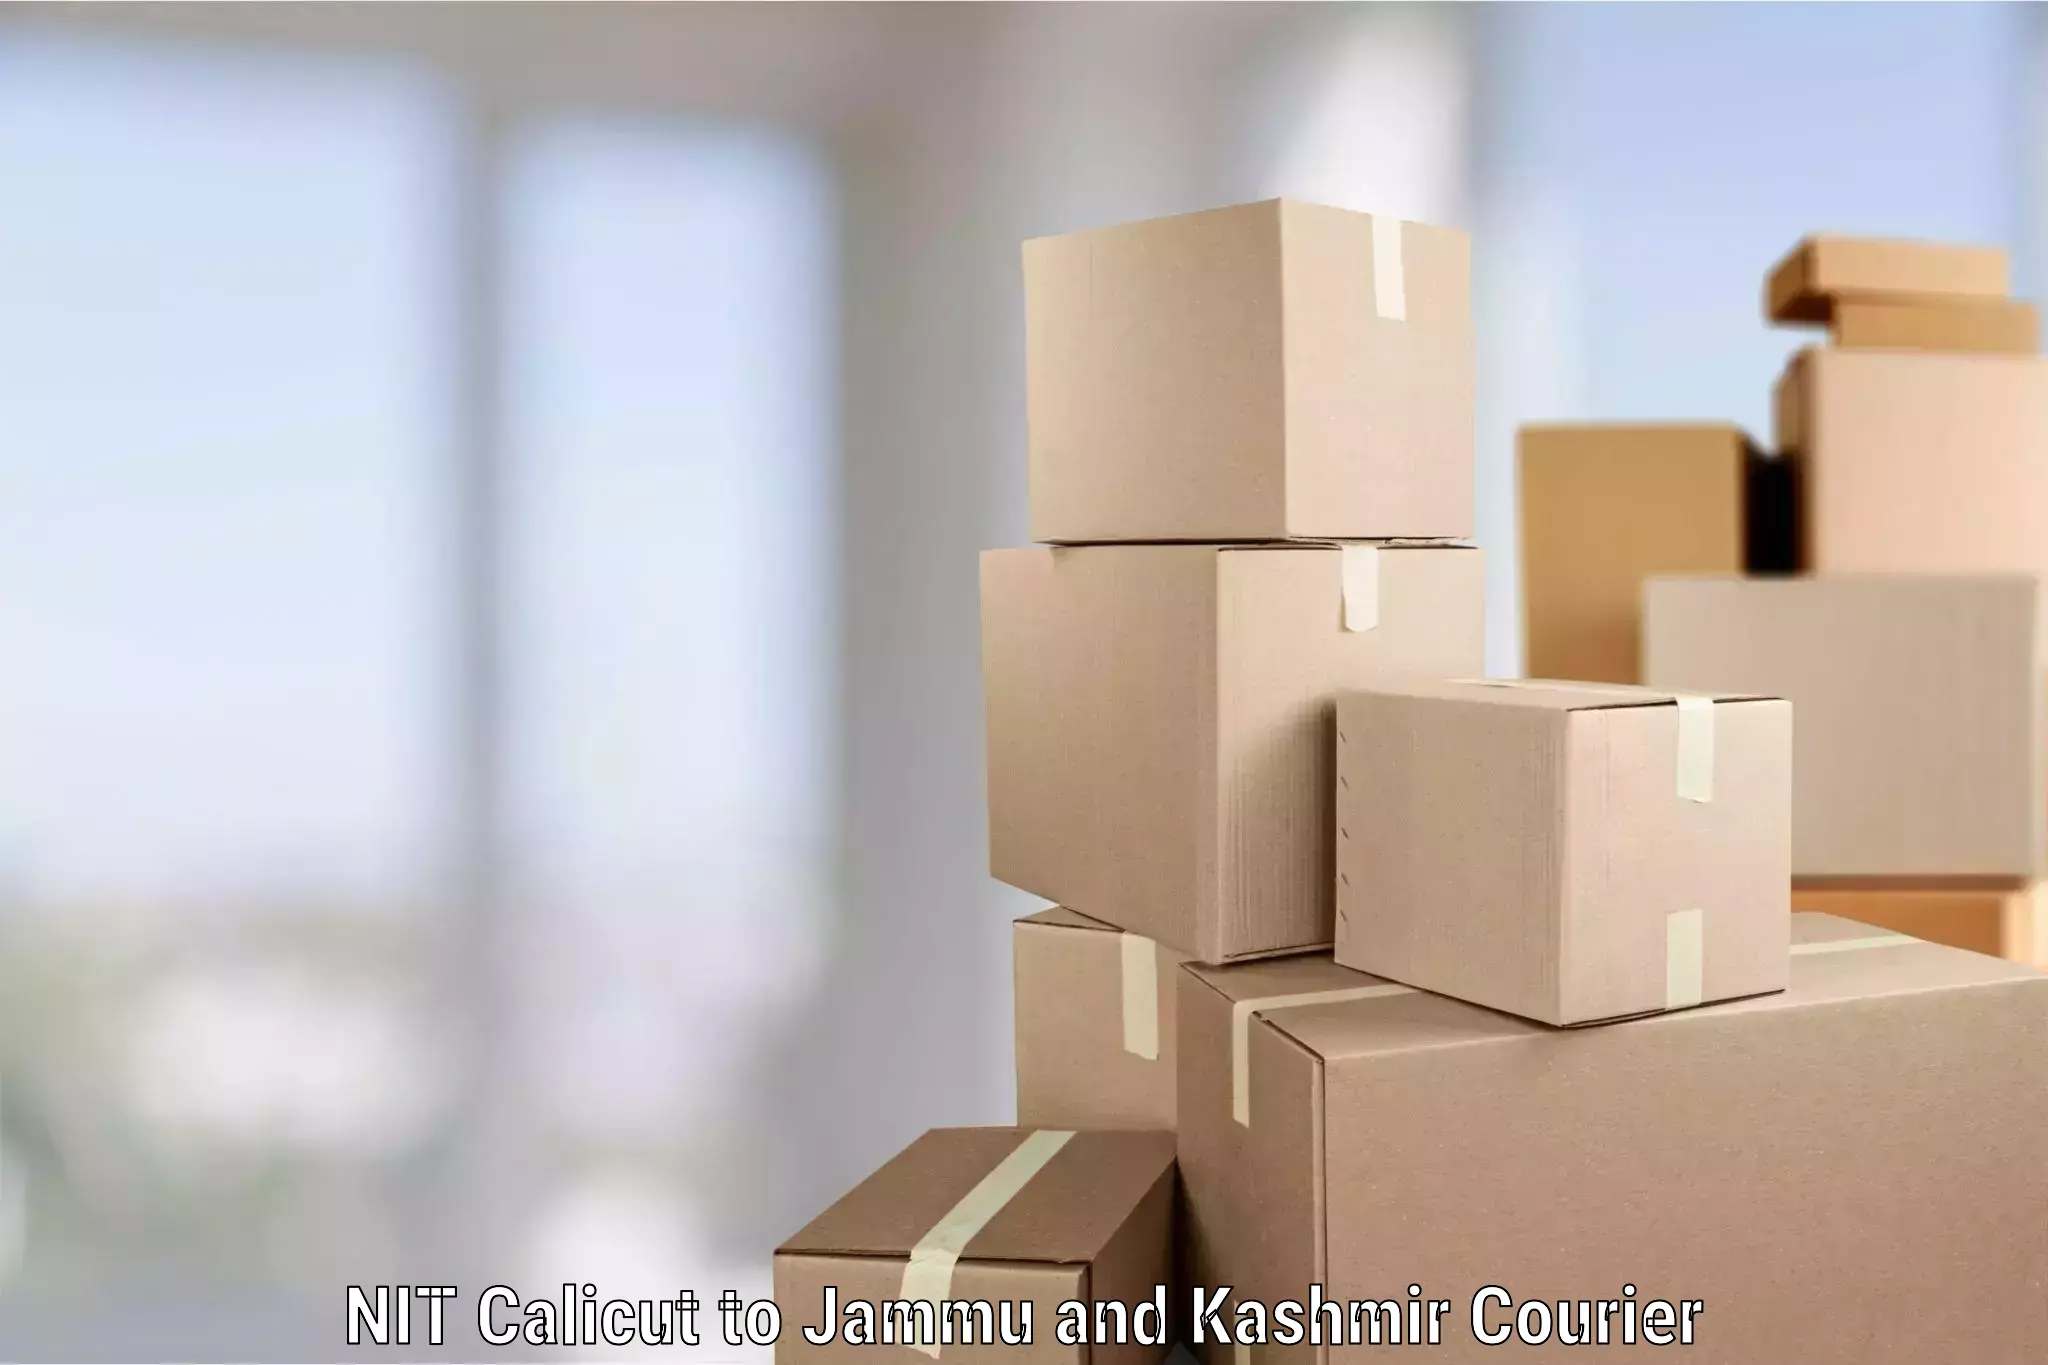 Professional furniture movers NIT Calicut to Kulgam